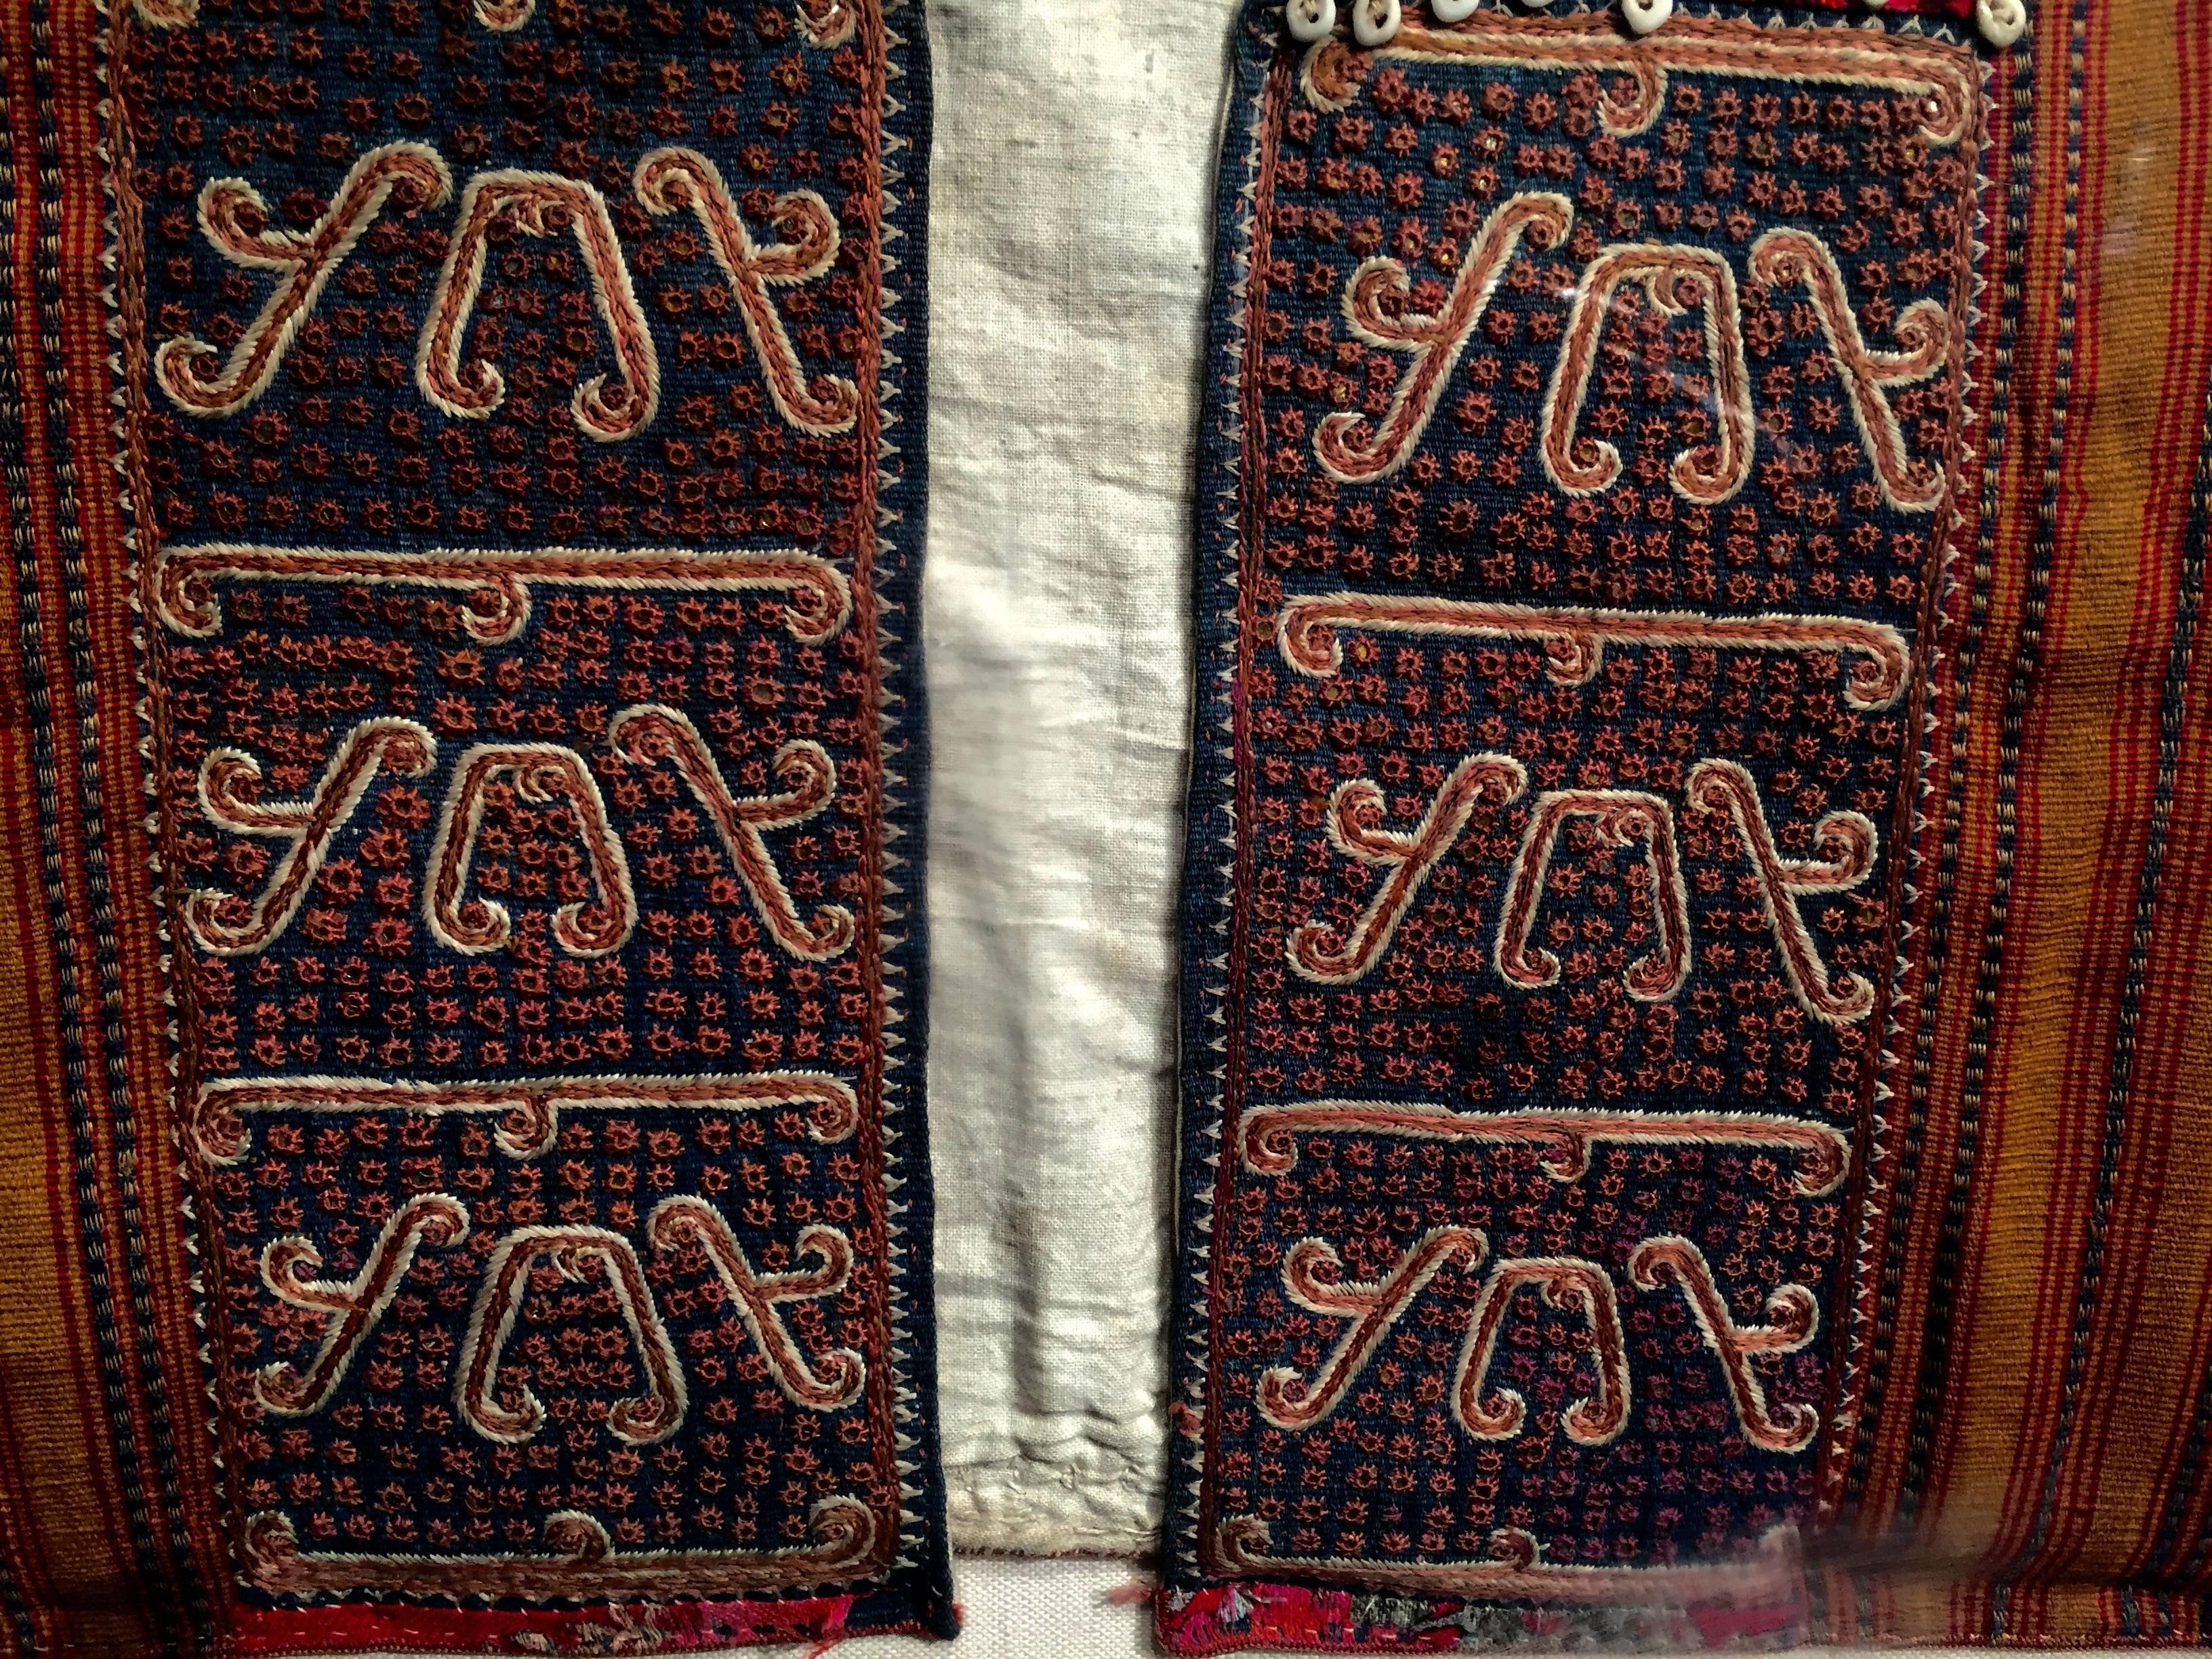 Cotton Early 20th Century Sumatran Ceremonial Jacket For Sale